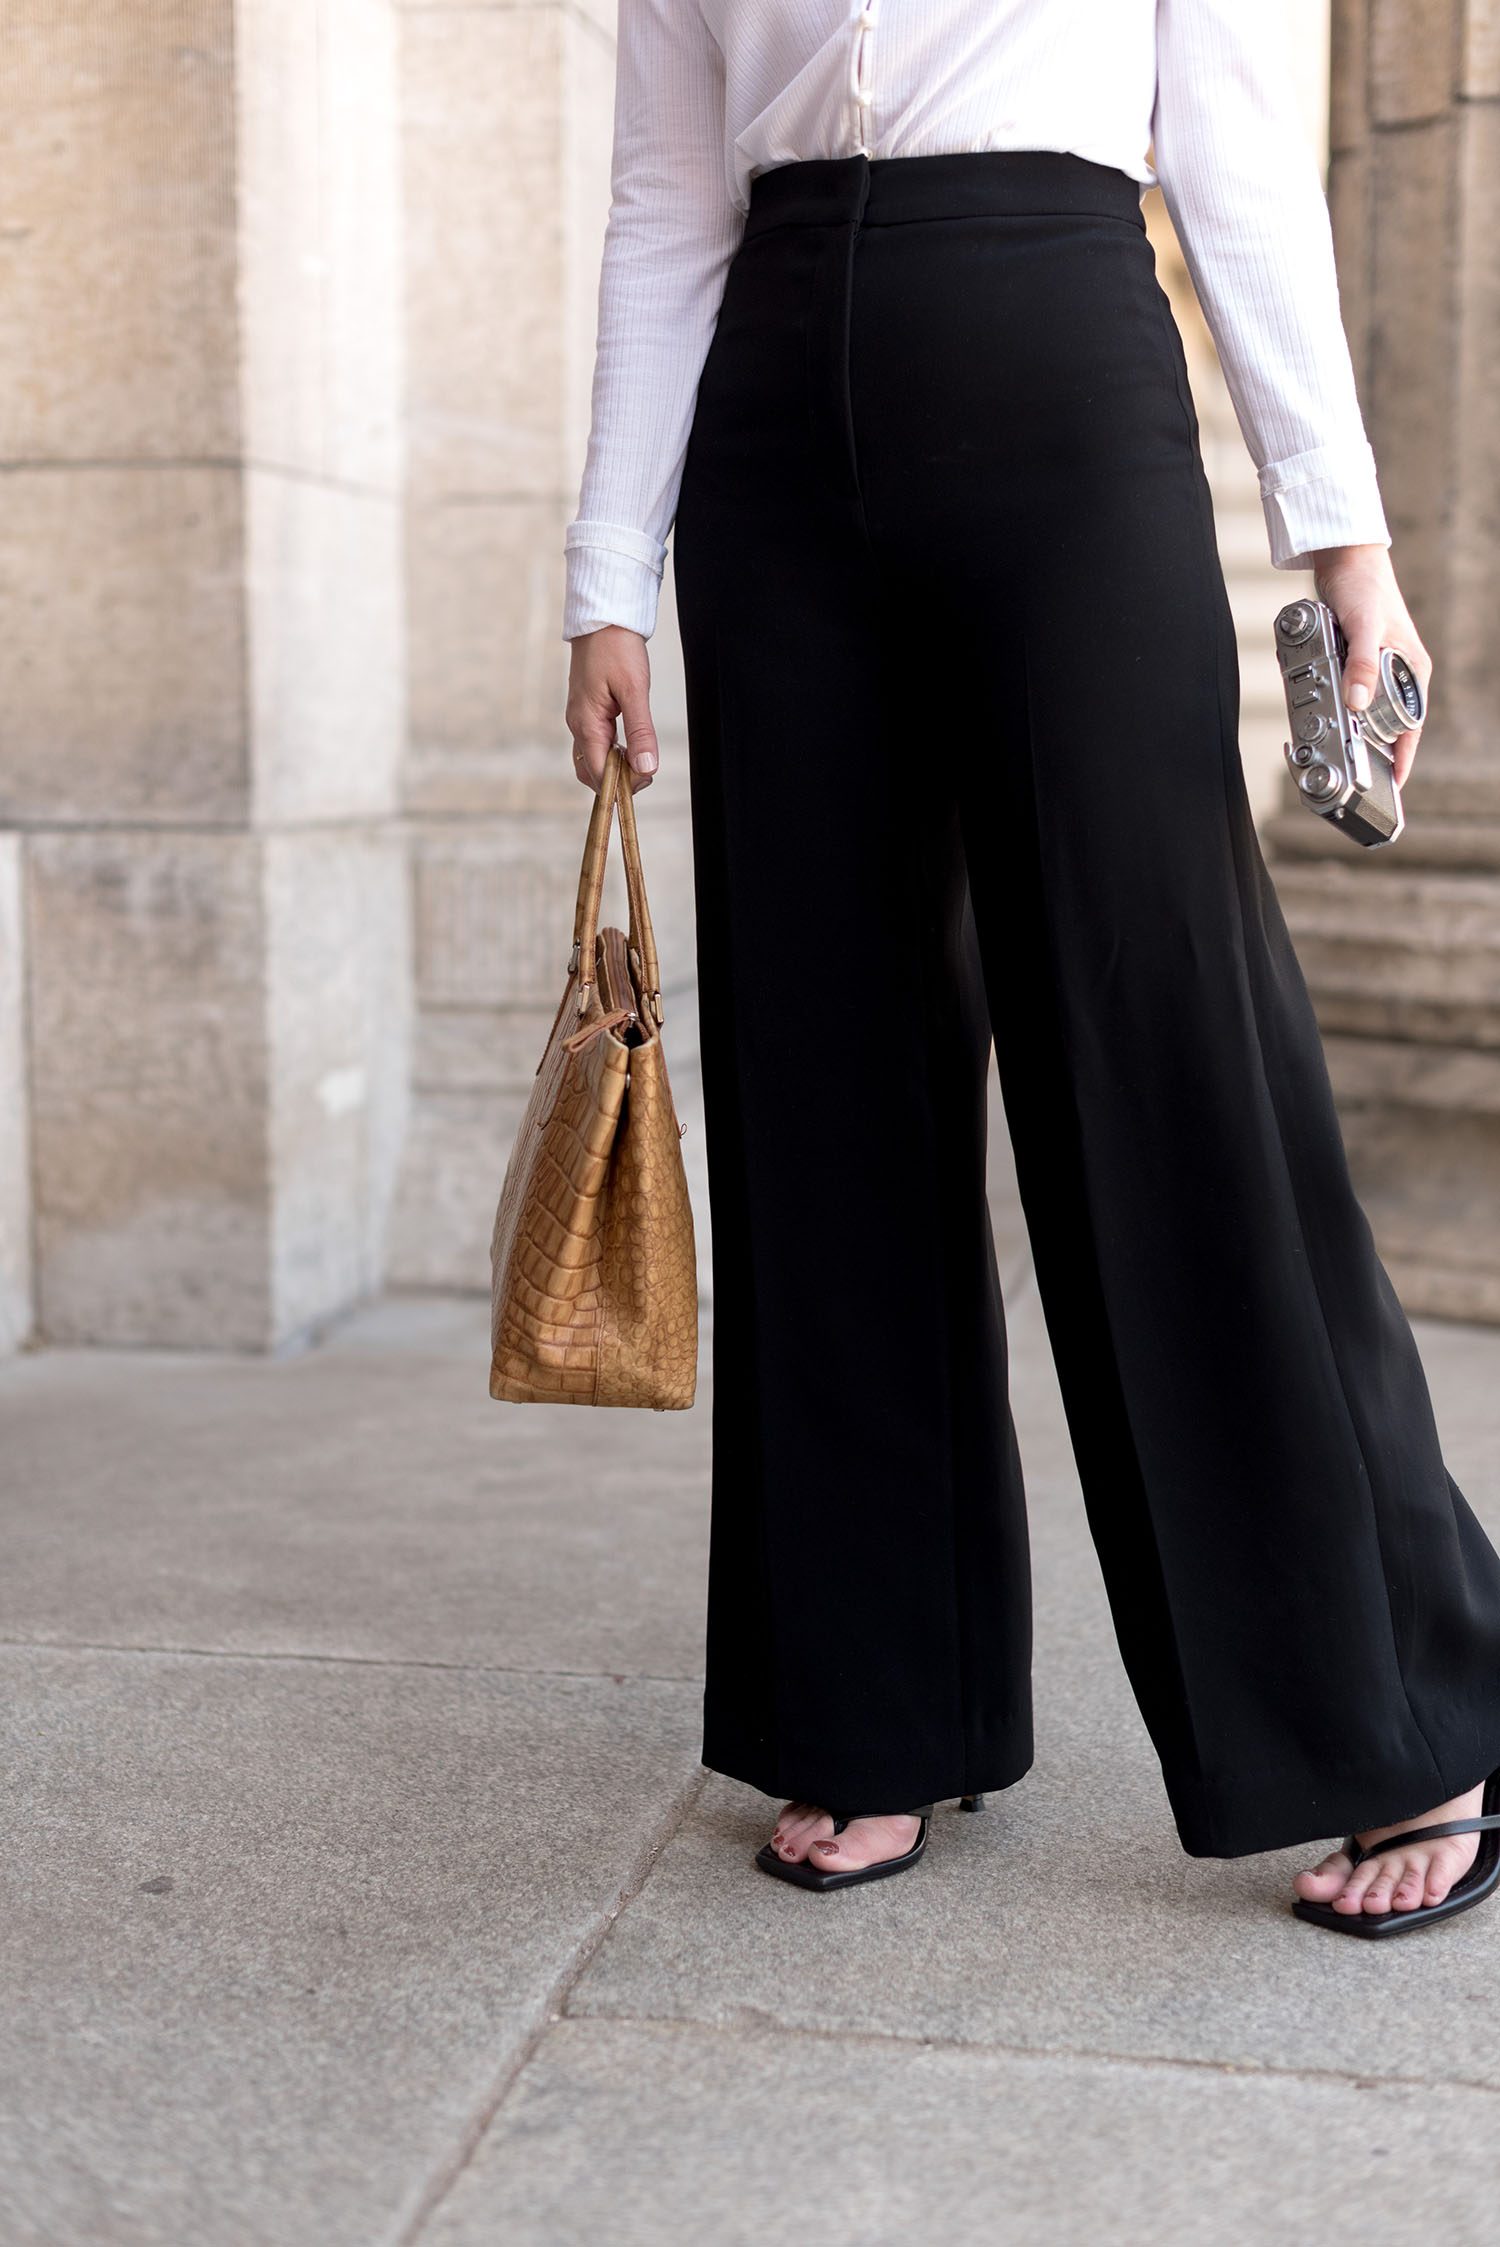 Coco & Vera - H&M trousers, Zara sandals, Vintage handbag